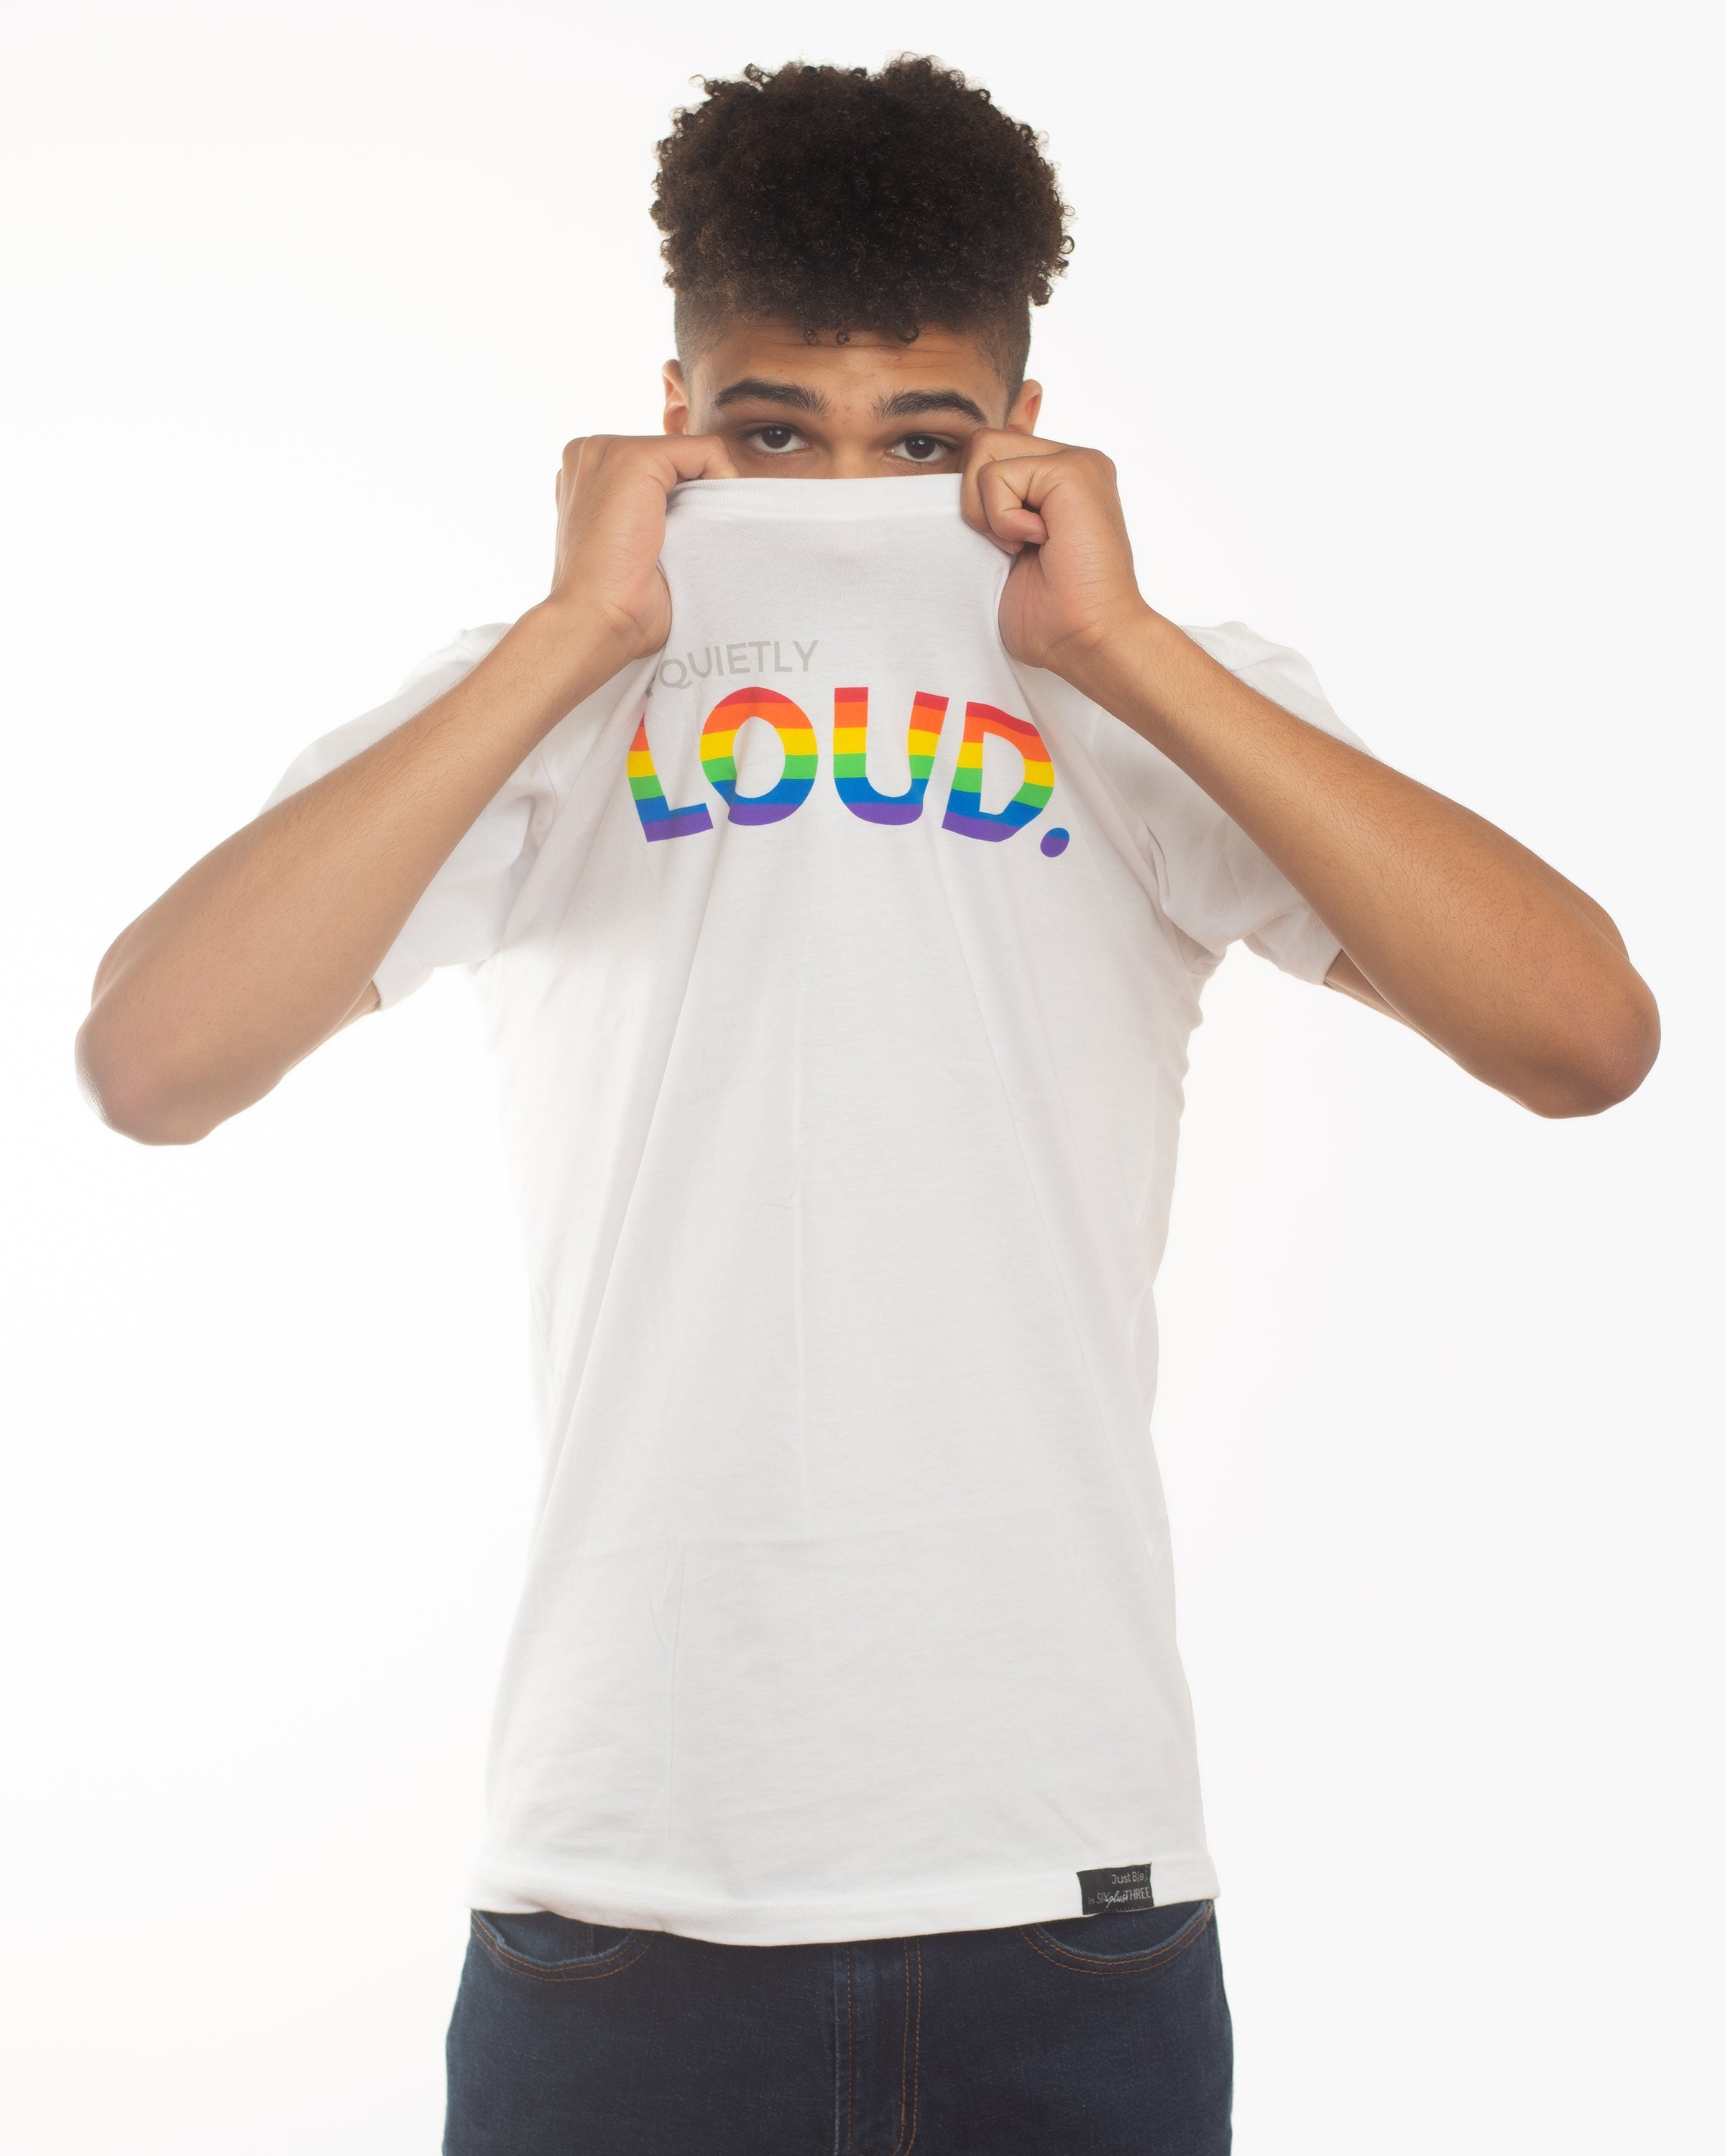 Be Quietly Loud Rainbow Tshirt